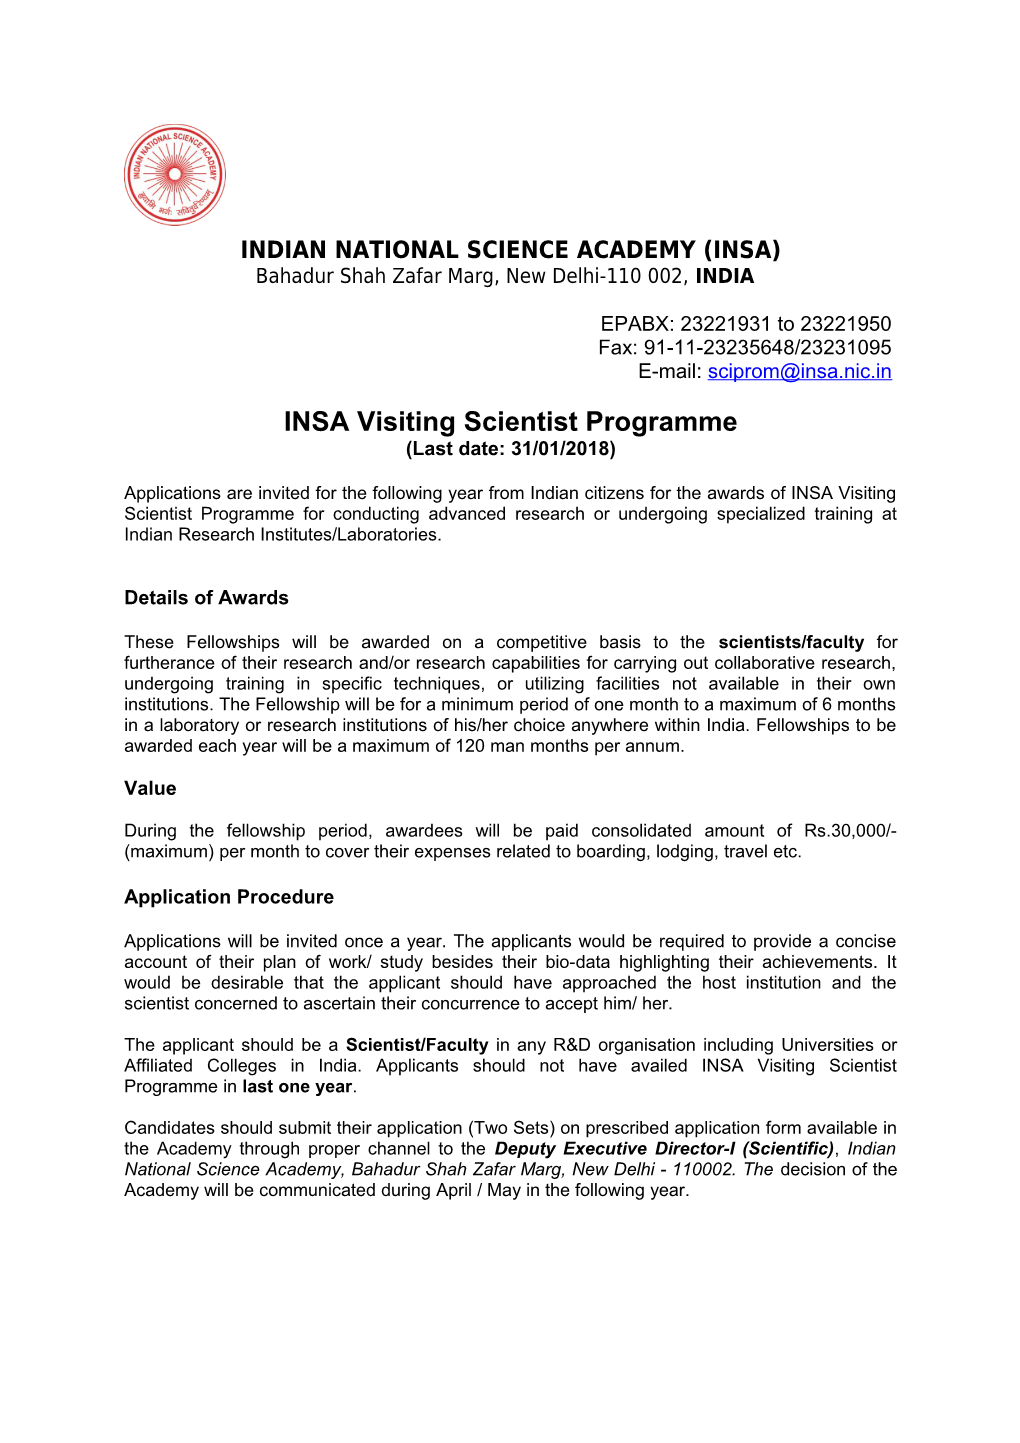 INSA Visiting Scientist Programme